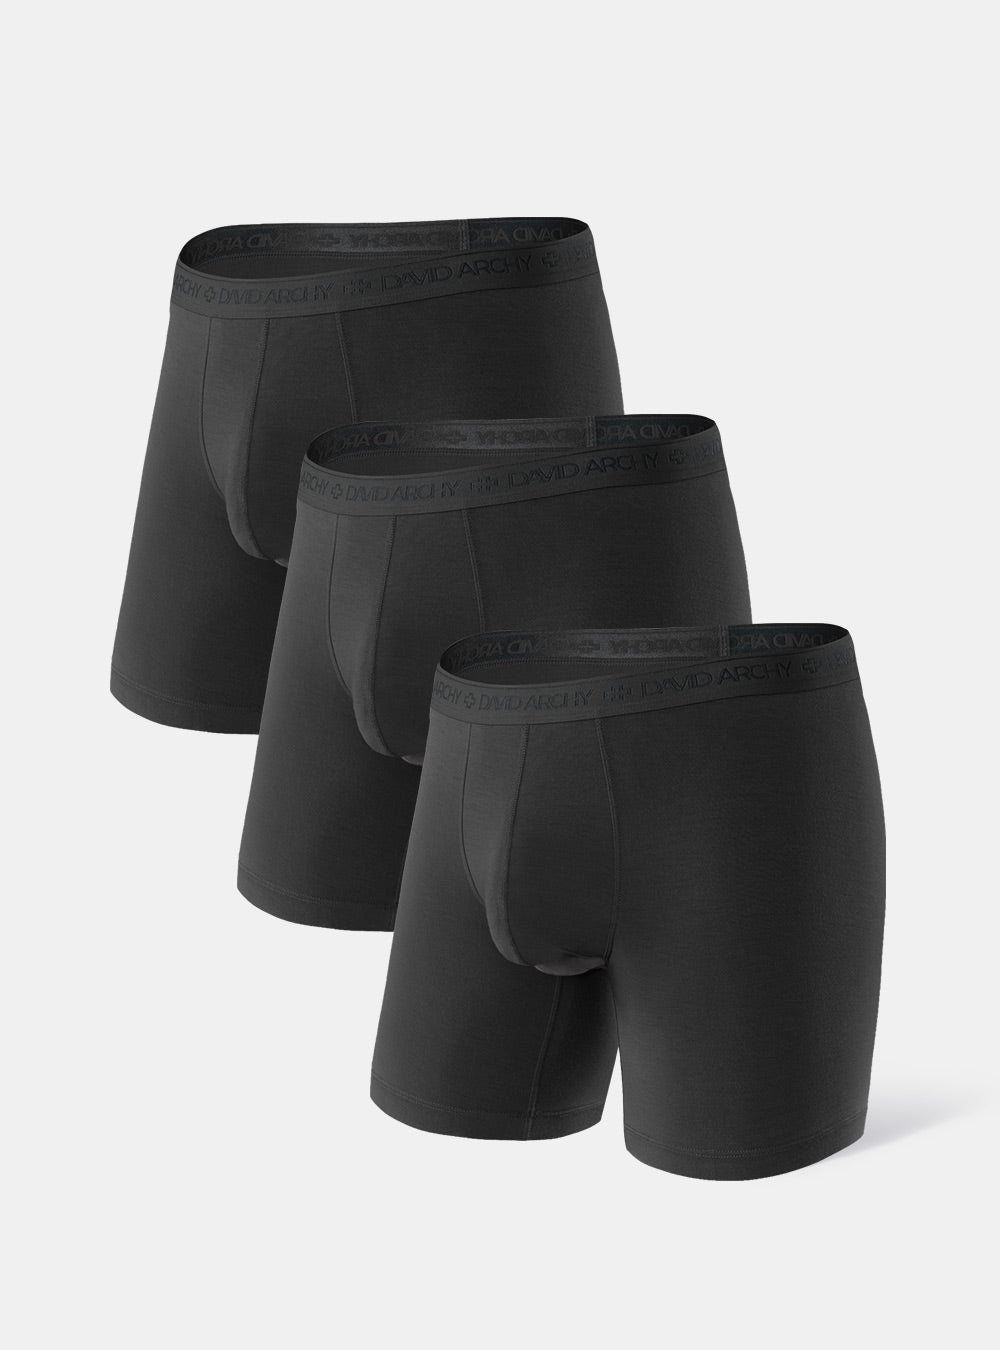 Separatec 3 Pack Mens Underwear Boxer Briefs Breathable Boxer